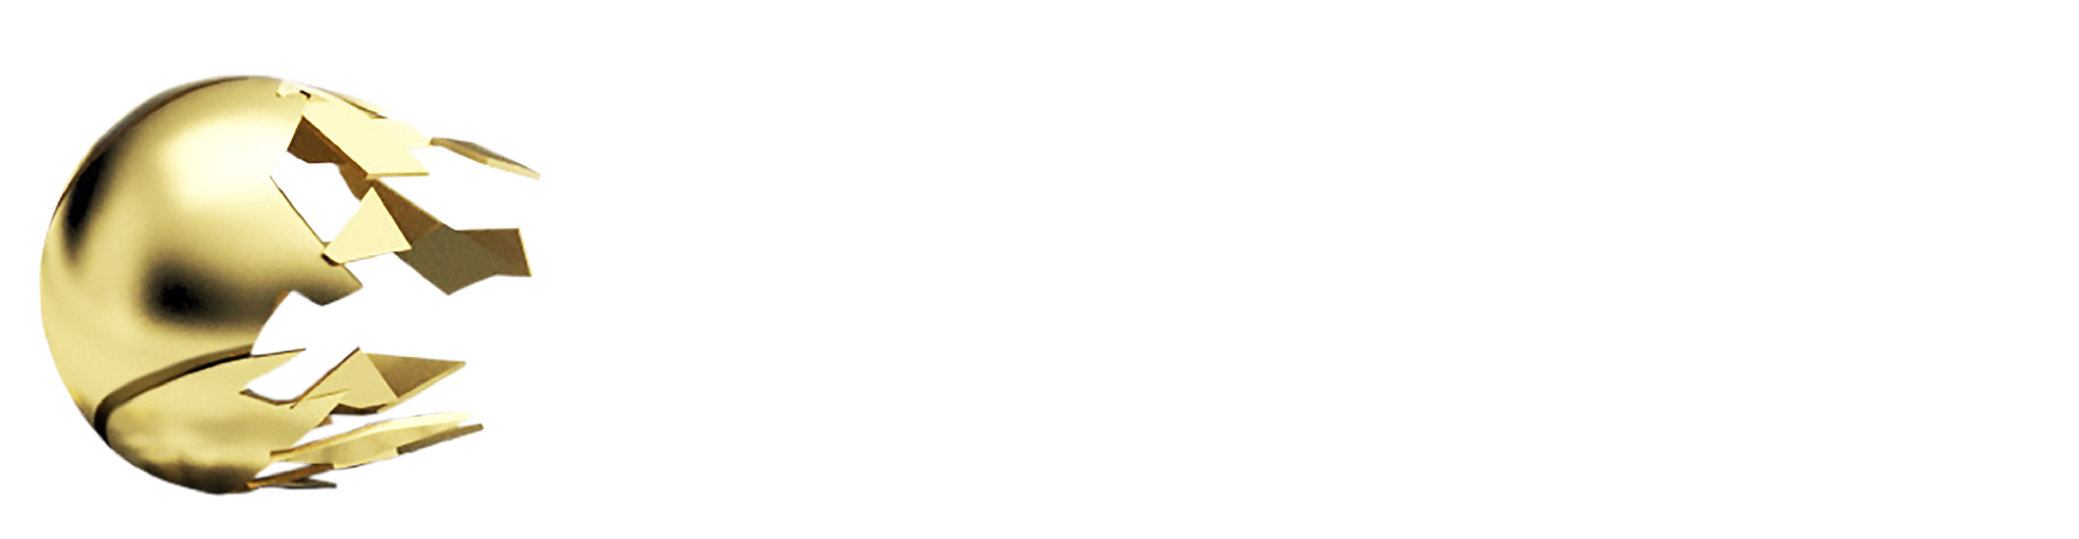 Legends Team Cup - Route to Dubai